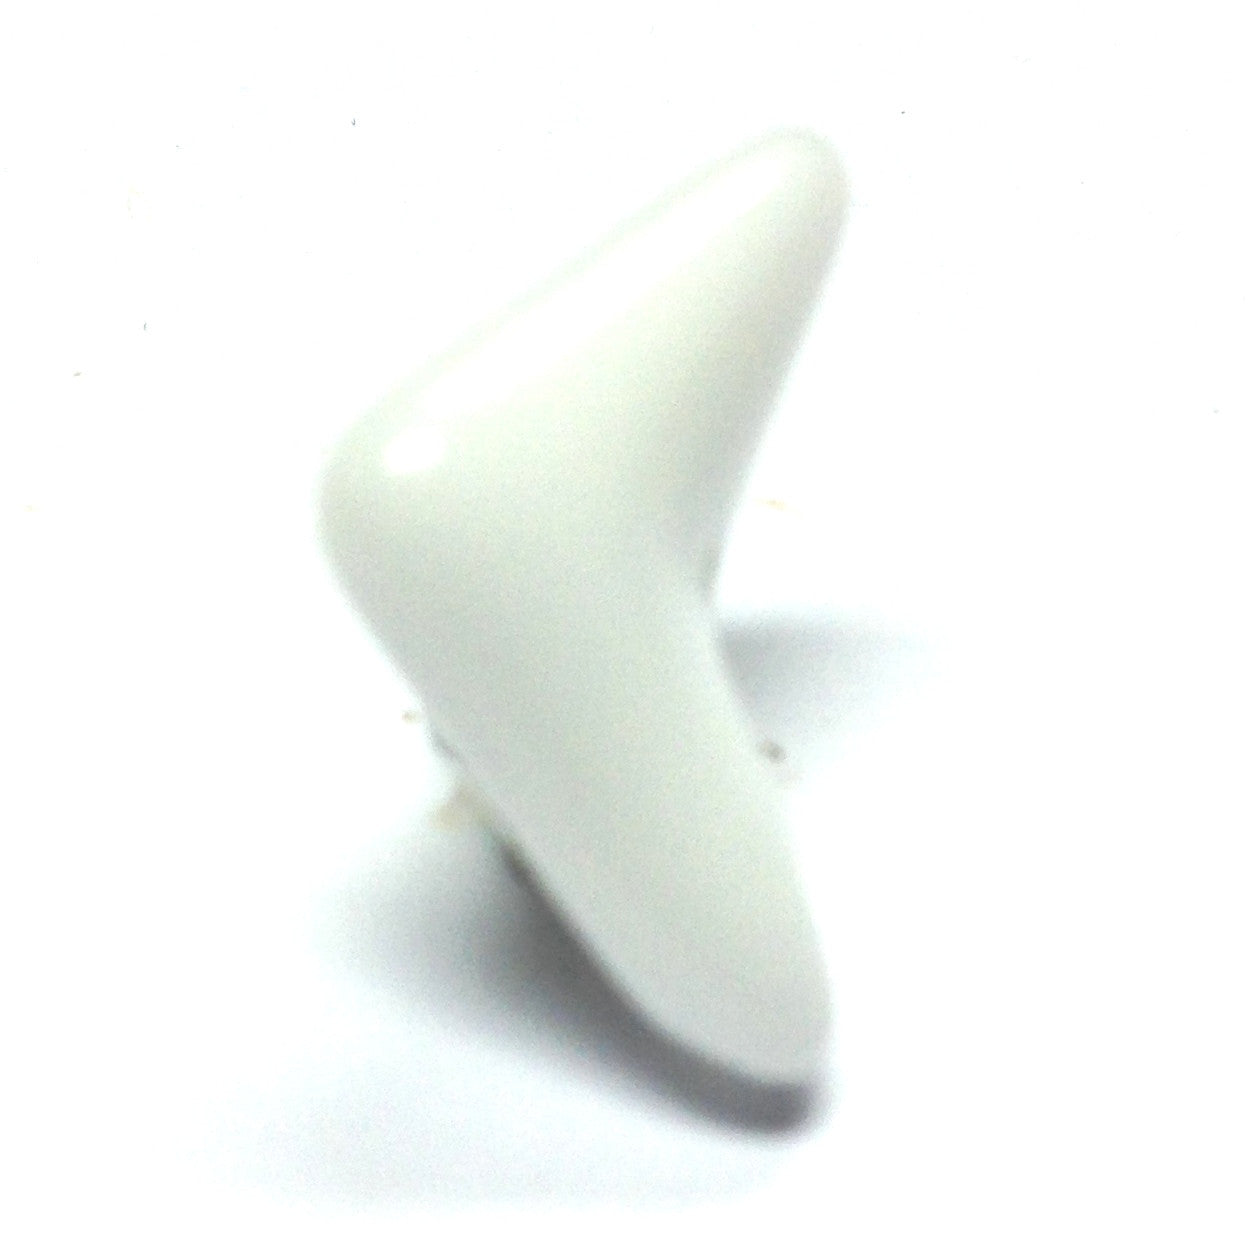 White Glass Interlock Bead (36 pieces)